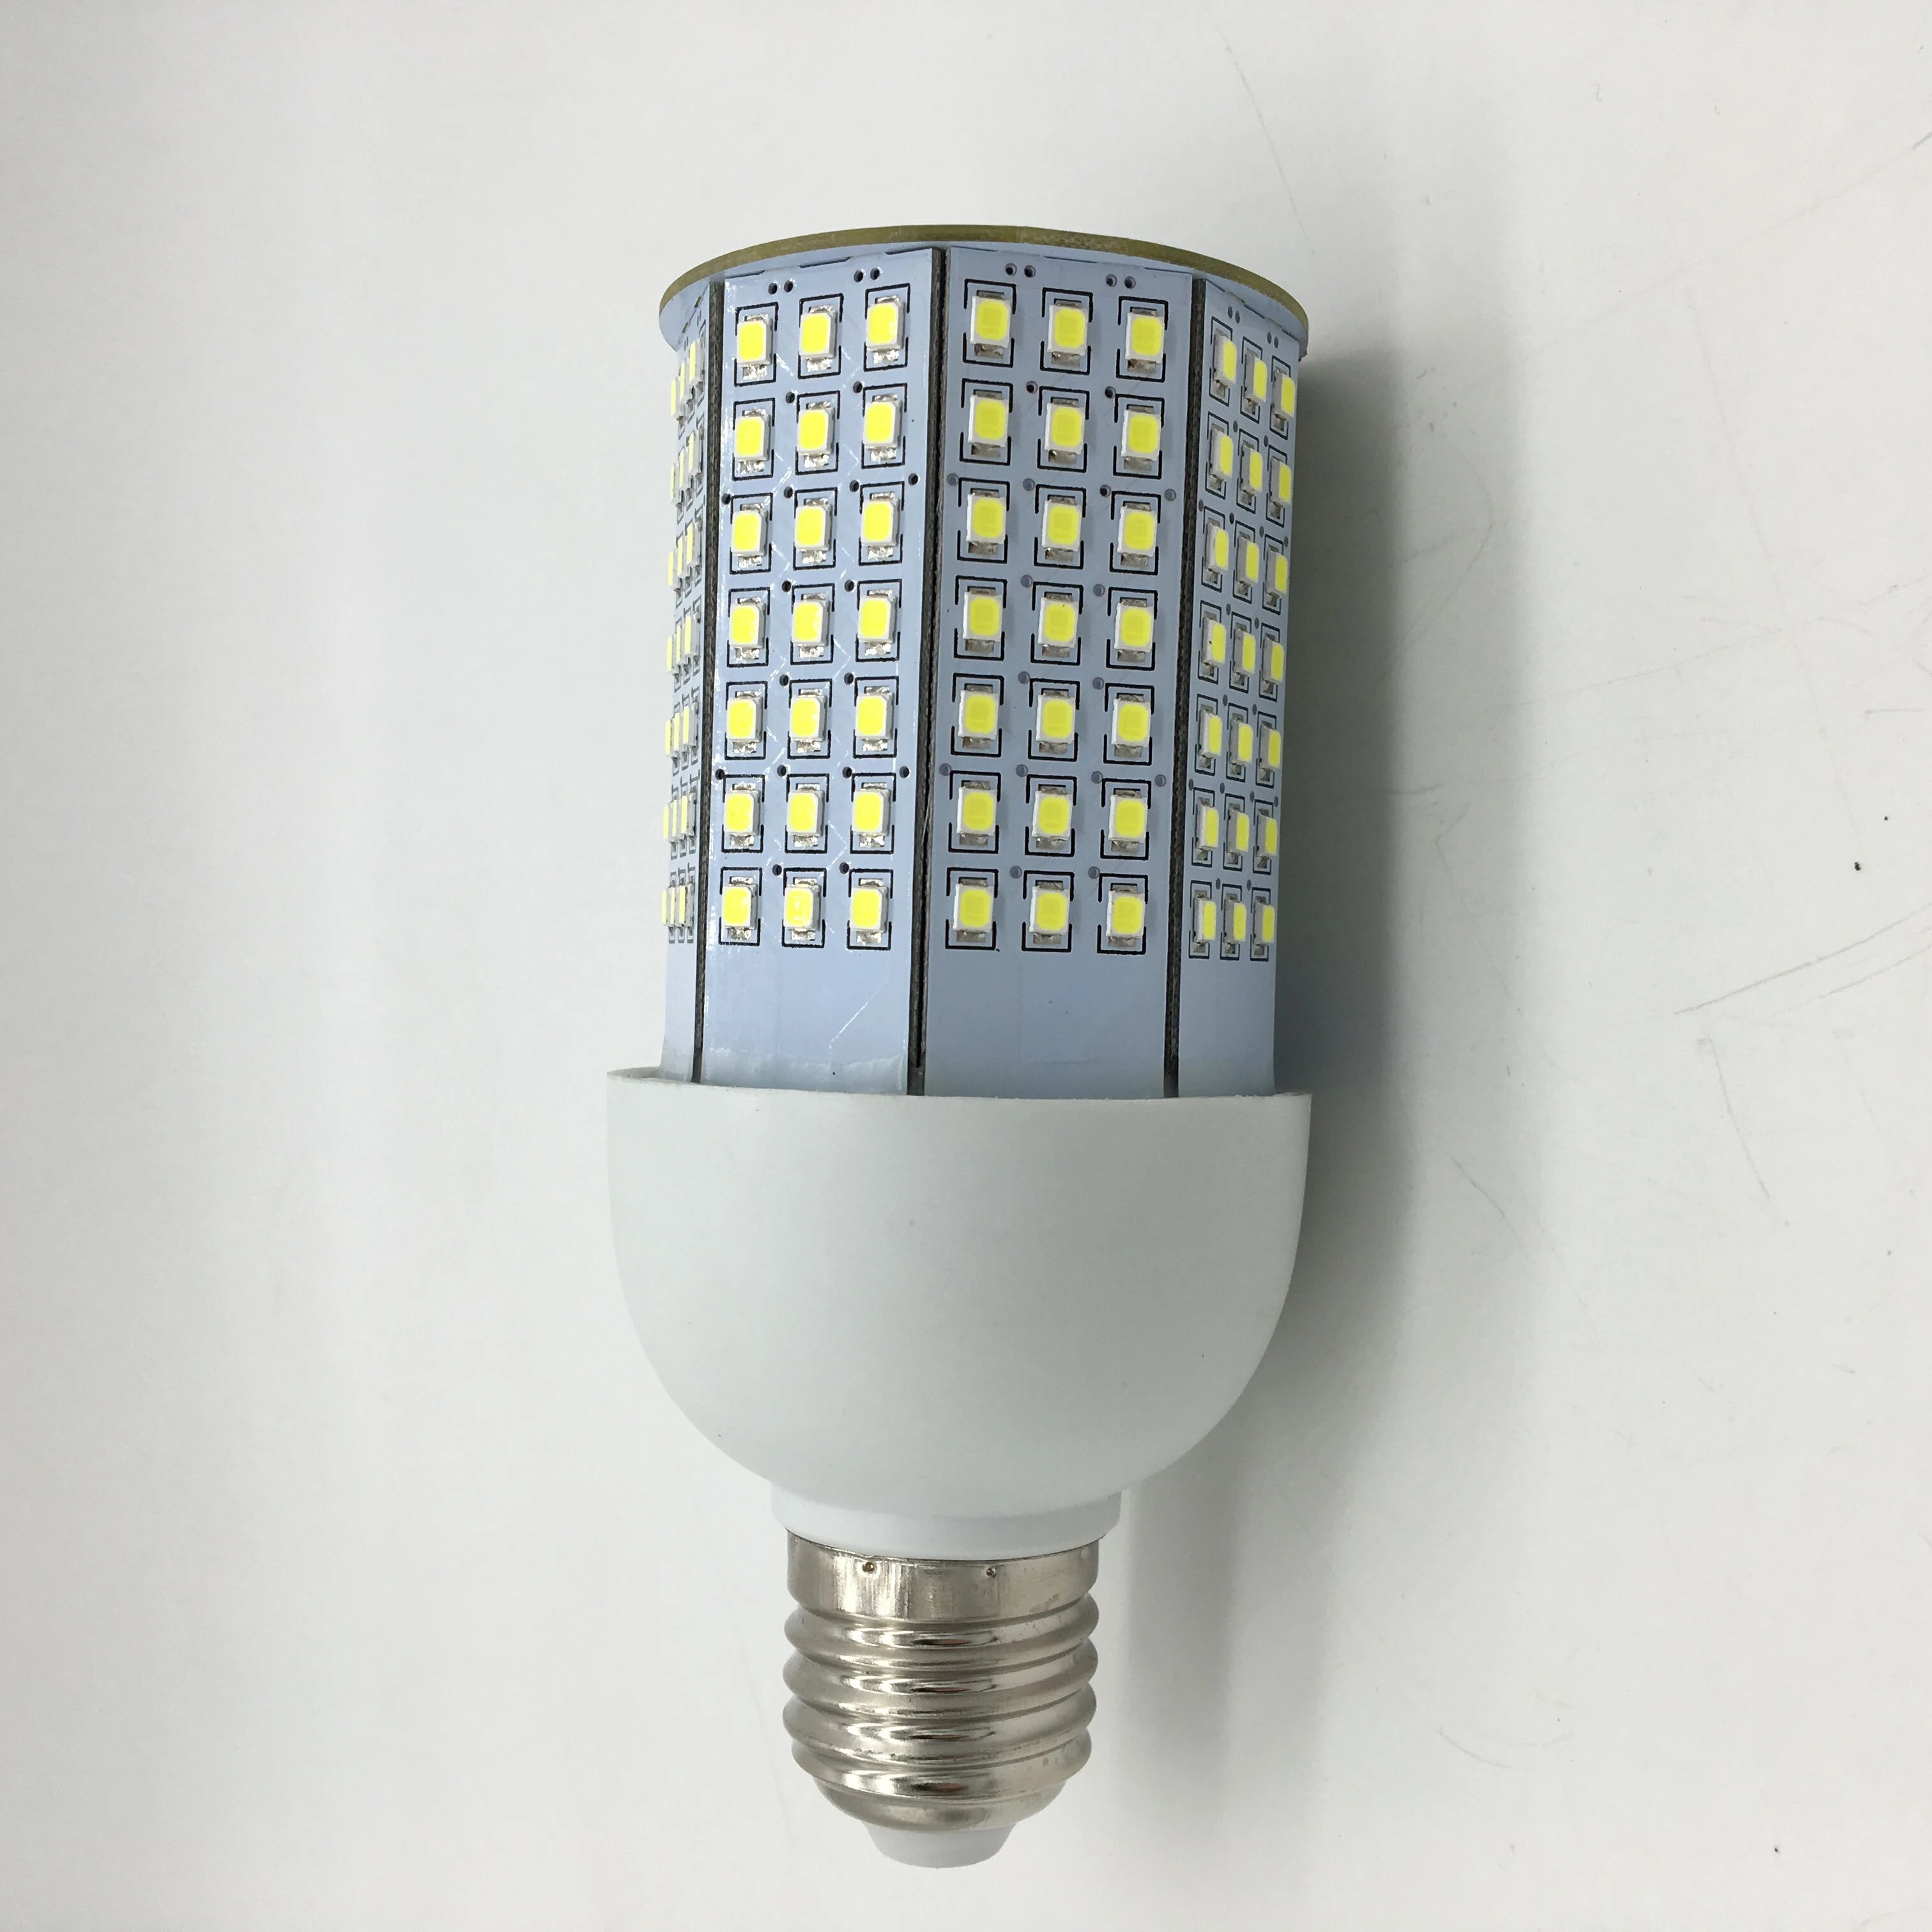 Hot Sale 2020 Cob Light Lamp China Wholesale Cheap Price Energy Saving E27 E26 B22 10 watt CE RoHS LED Lights corn Electric Bulb